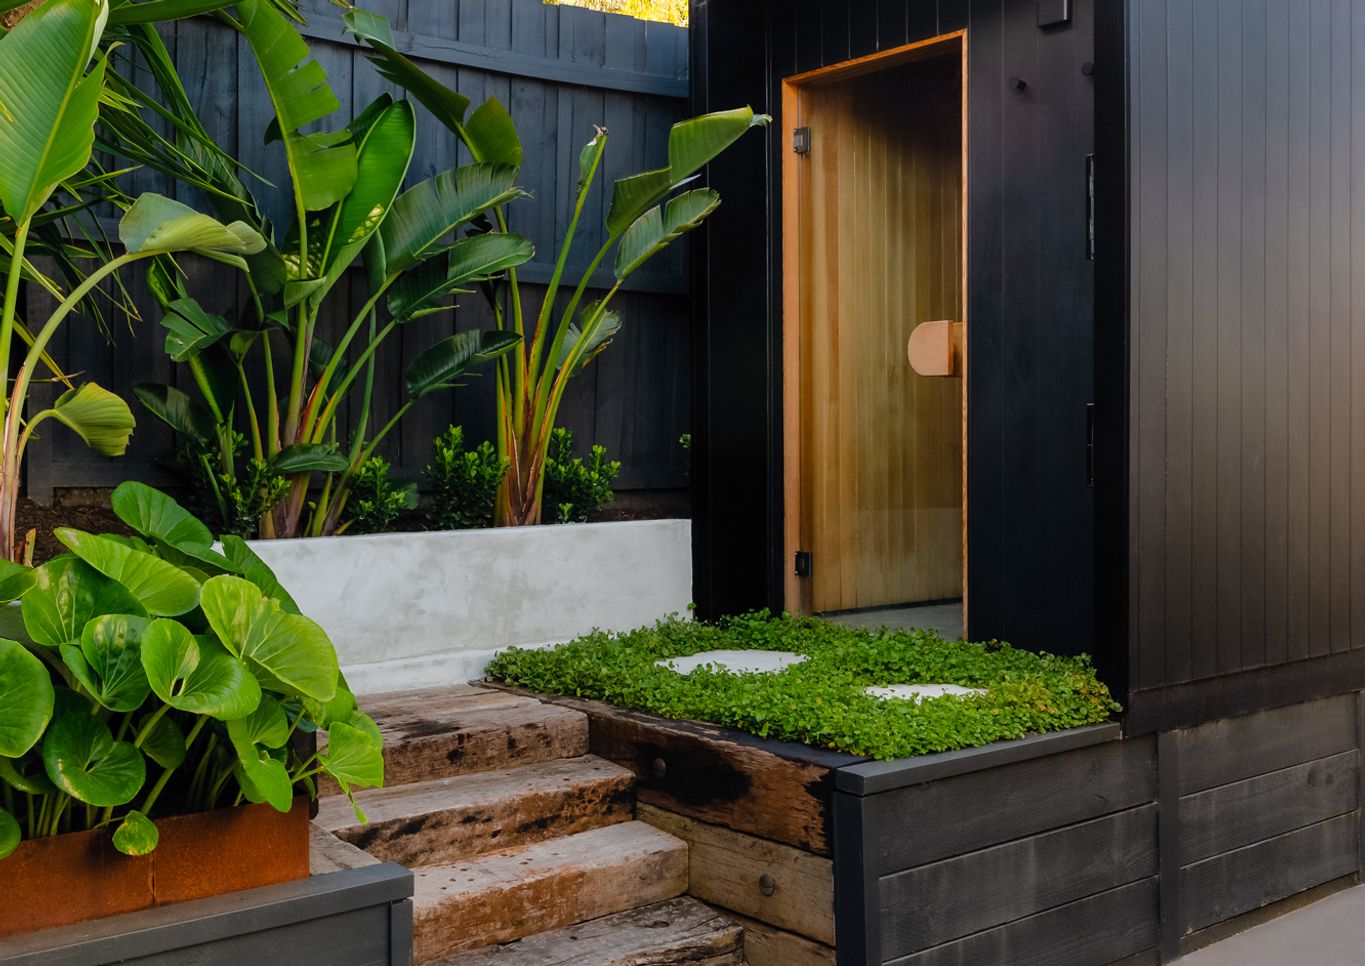 Torquay lush tropical pool and landscape design sauna